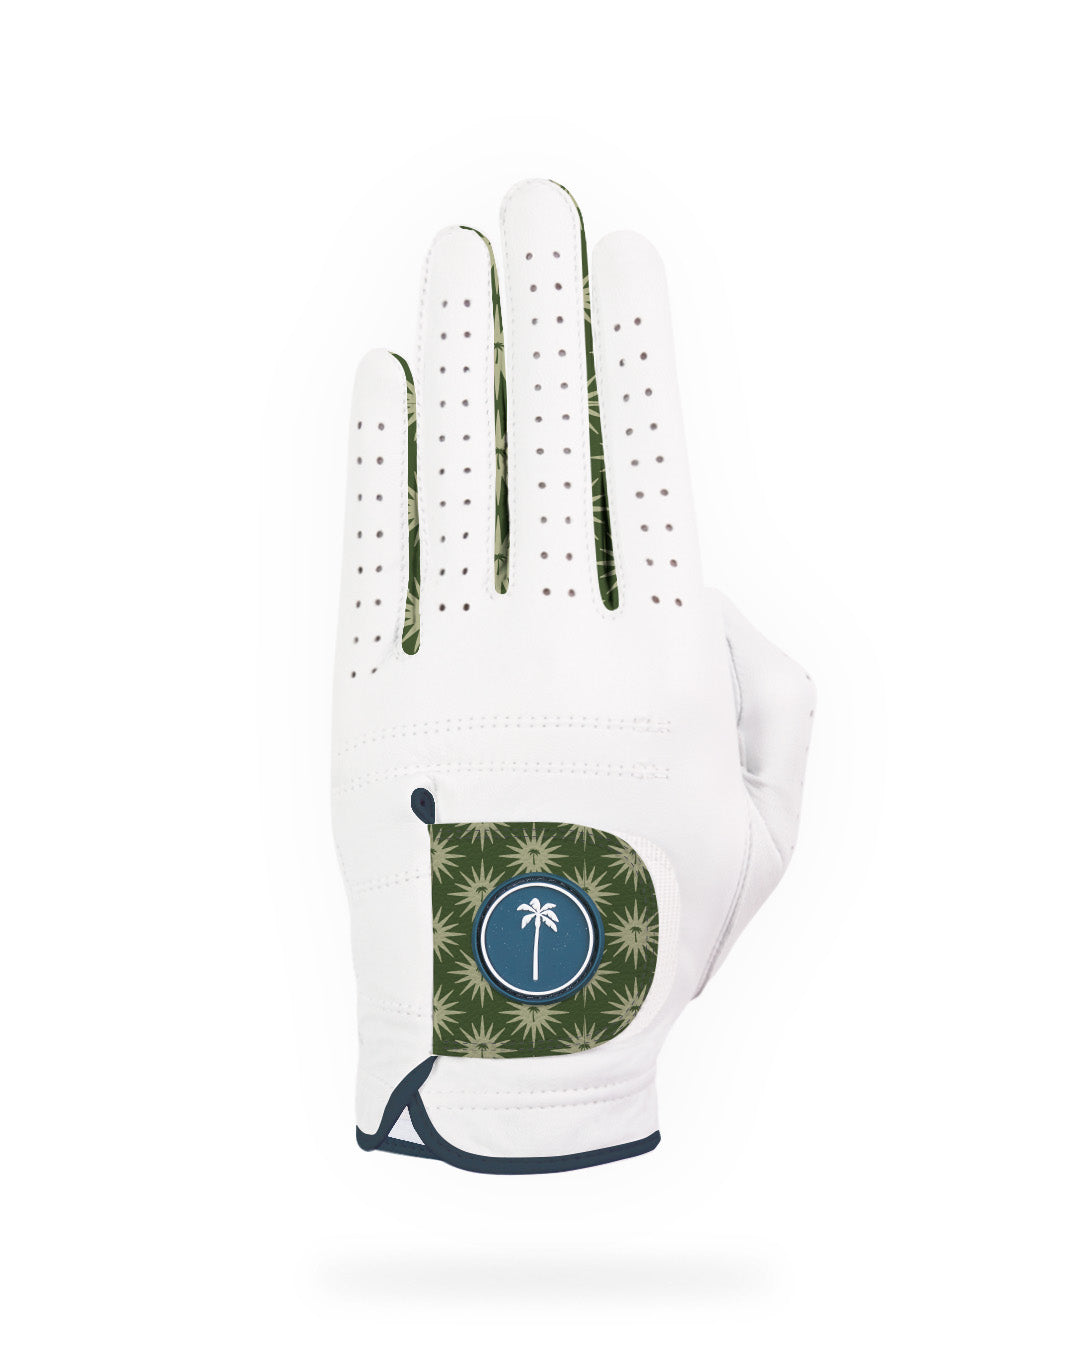 Men's Outta Sight Glove - Palm Golf Co.